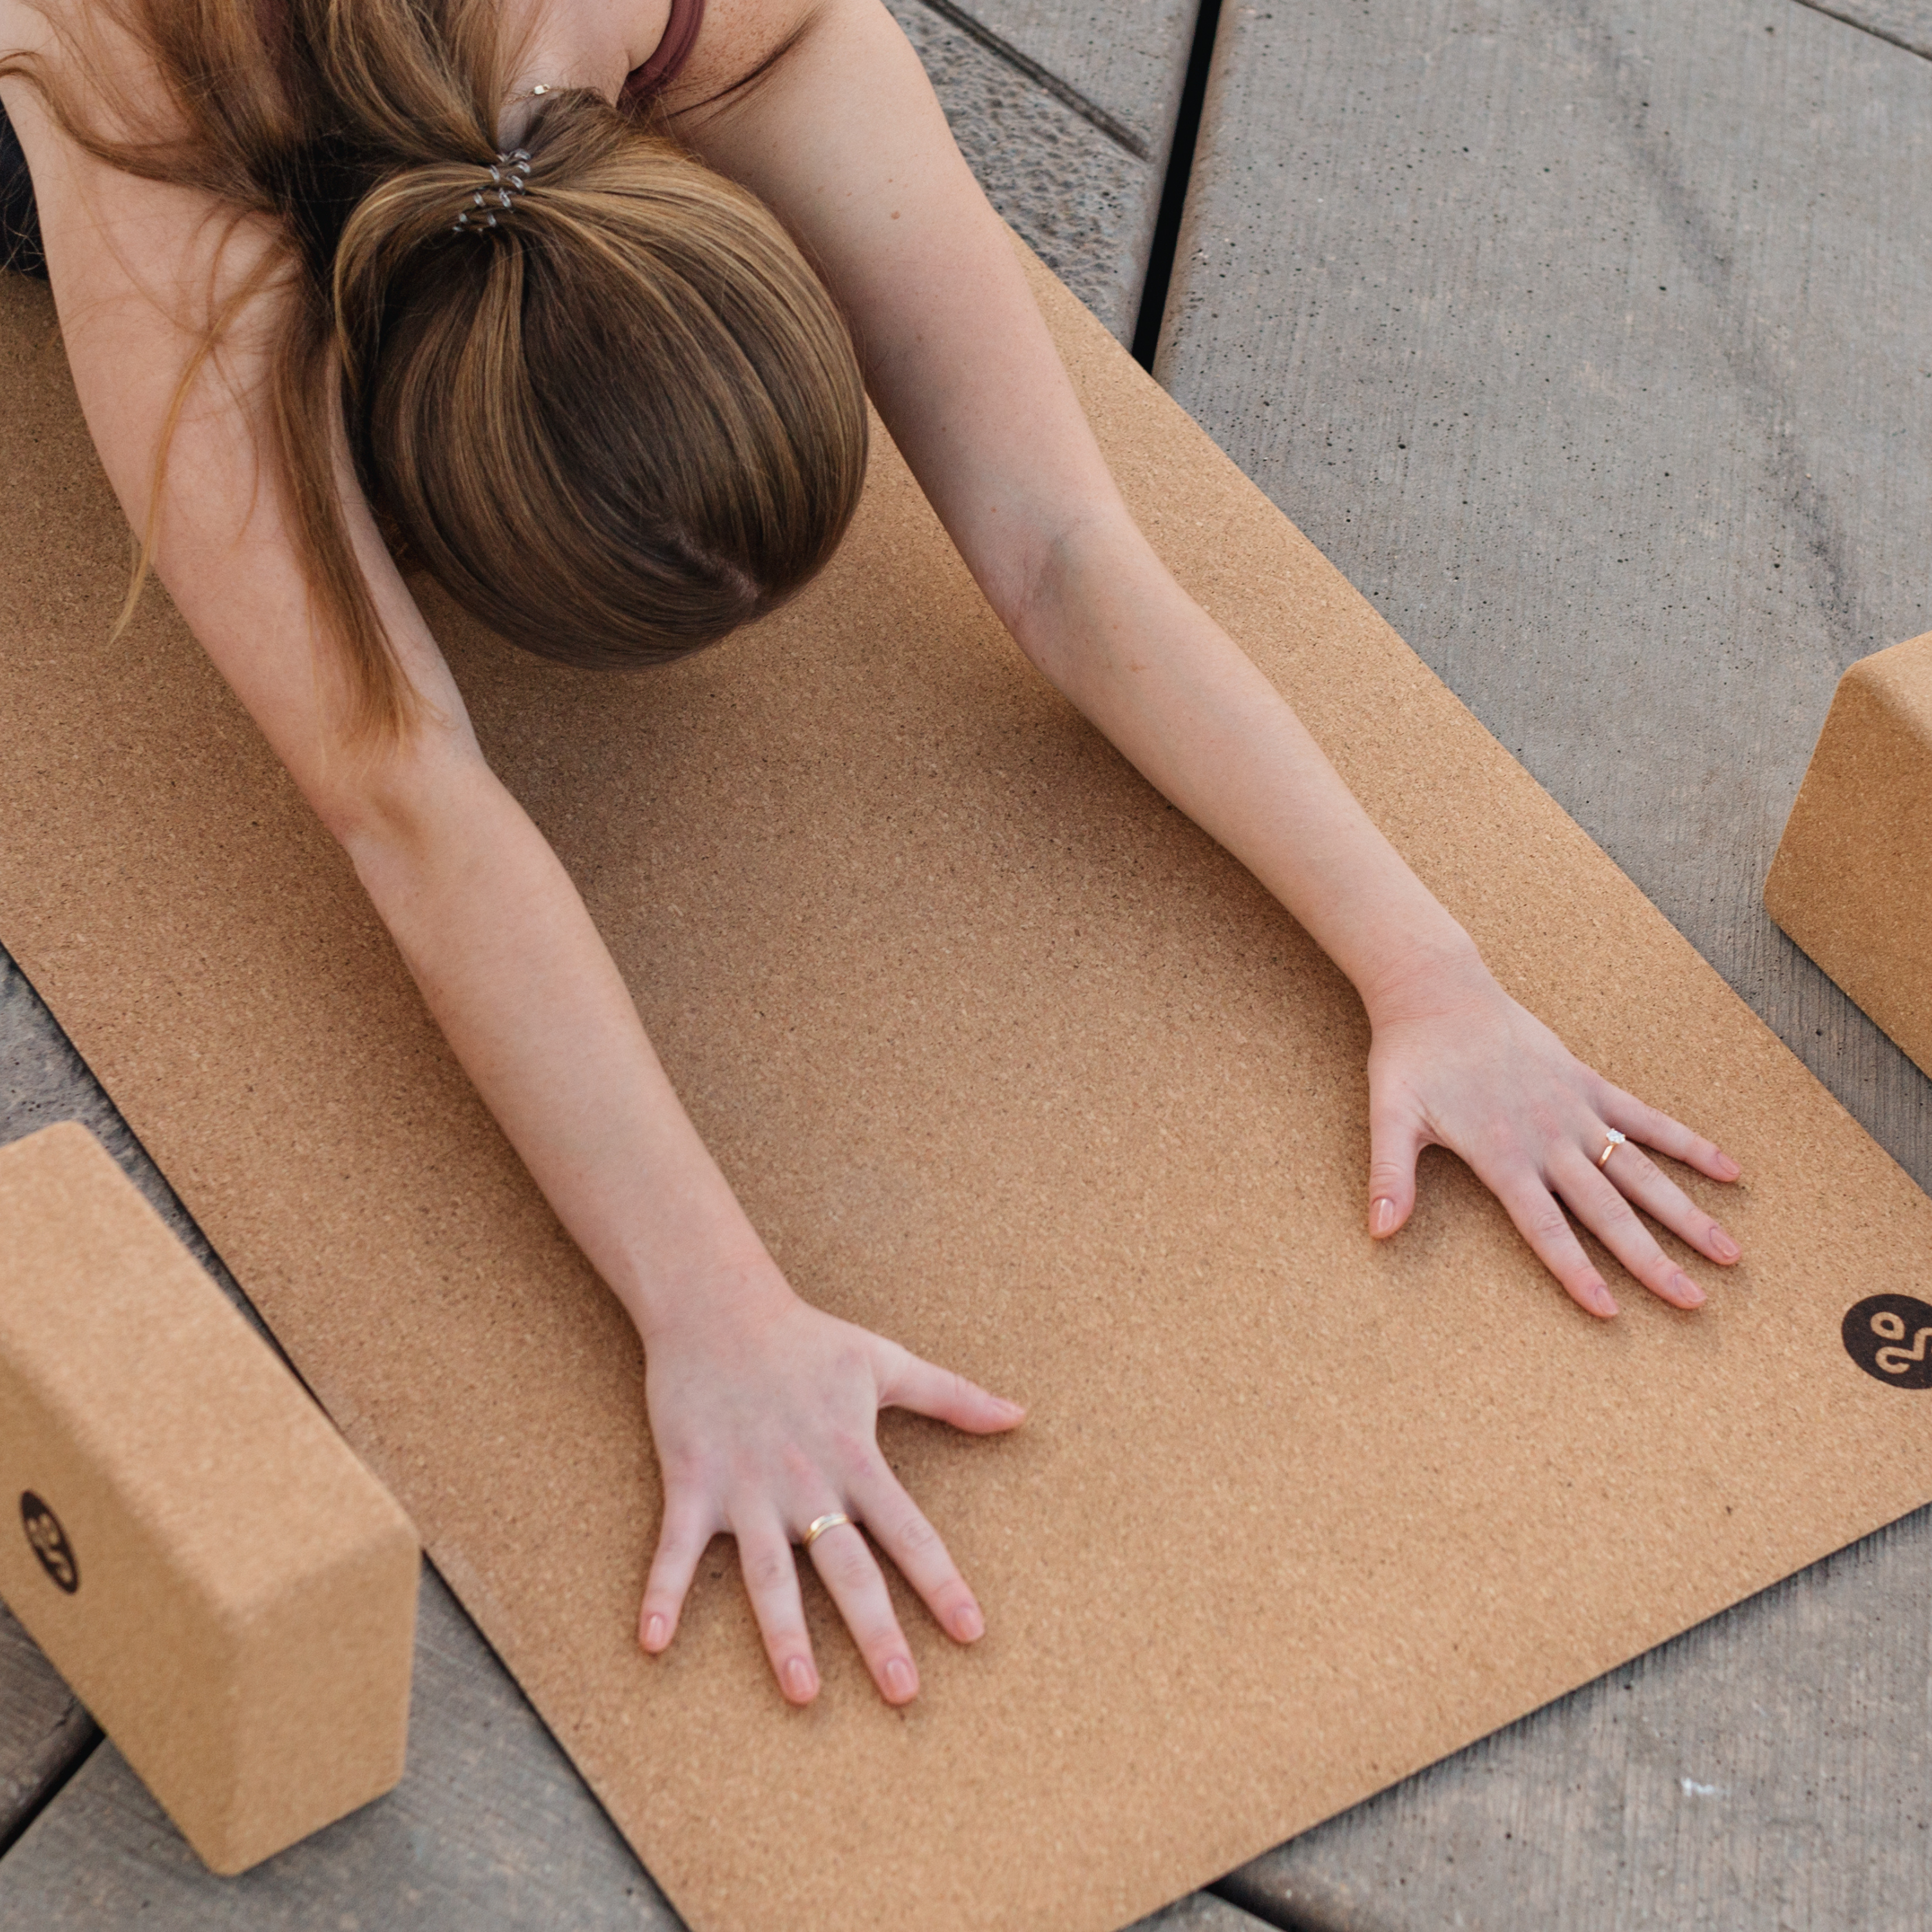 Purchase Wholesale cork yoga mat. Free Returns & Net 60 Terms on Faire